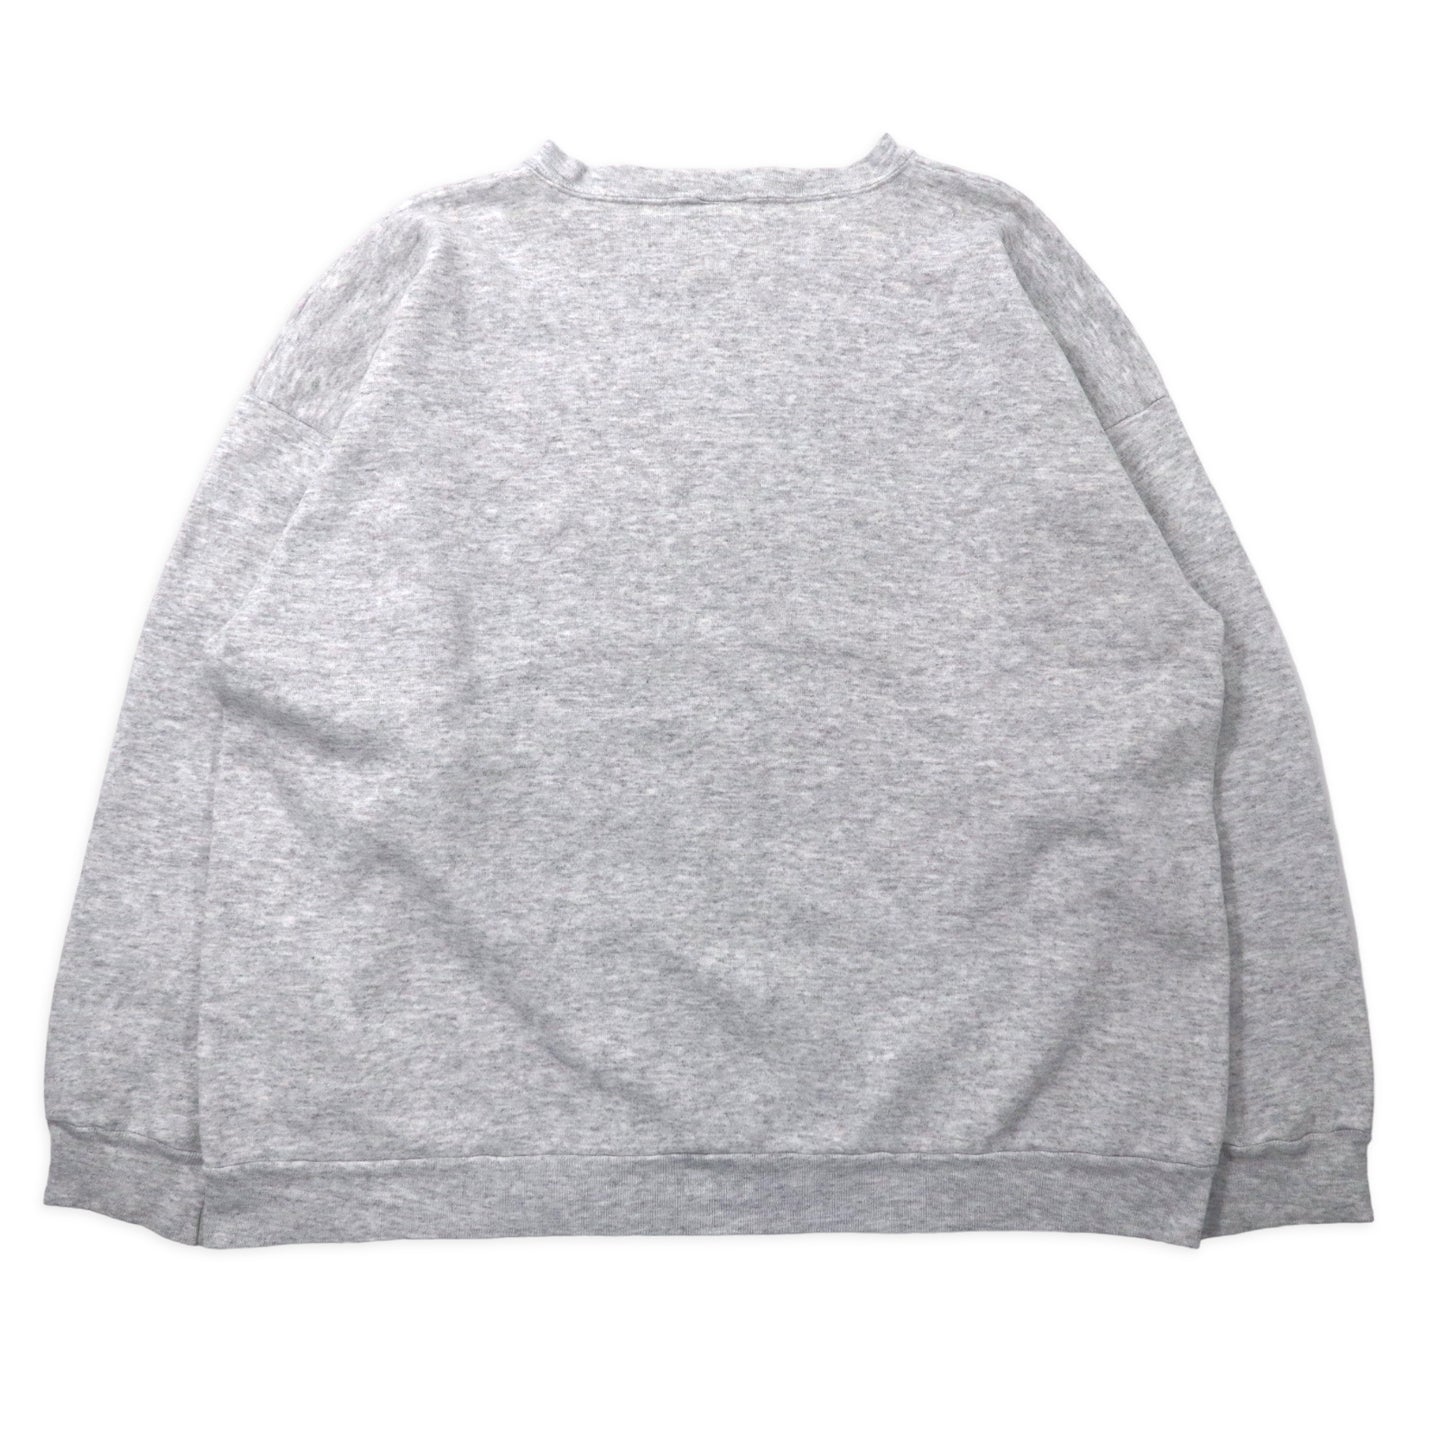 Cotton GROVE 90's Animal Print Sweatshirt 2XL Gray Cotton Big Size 